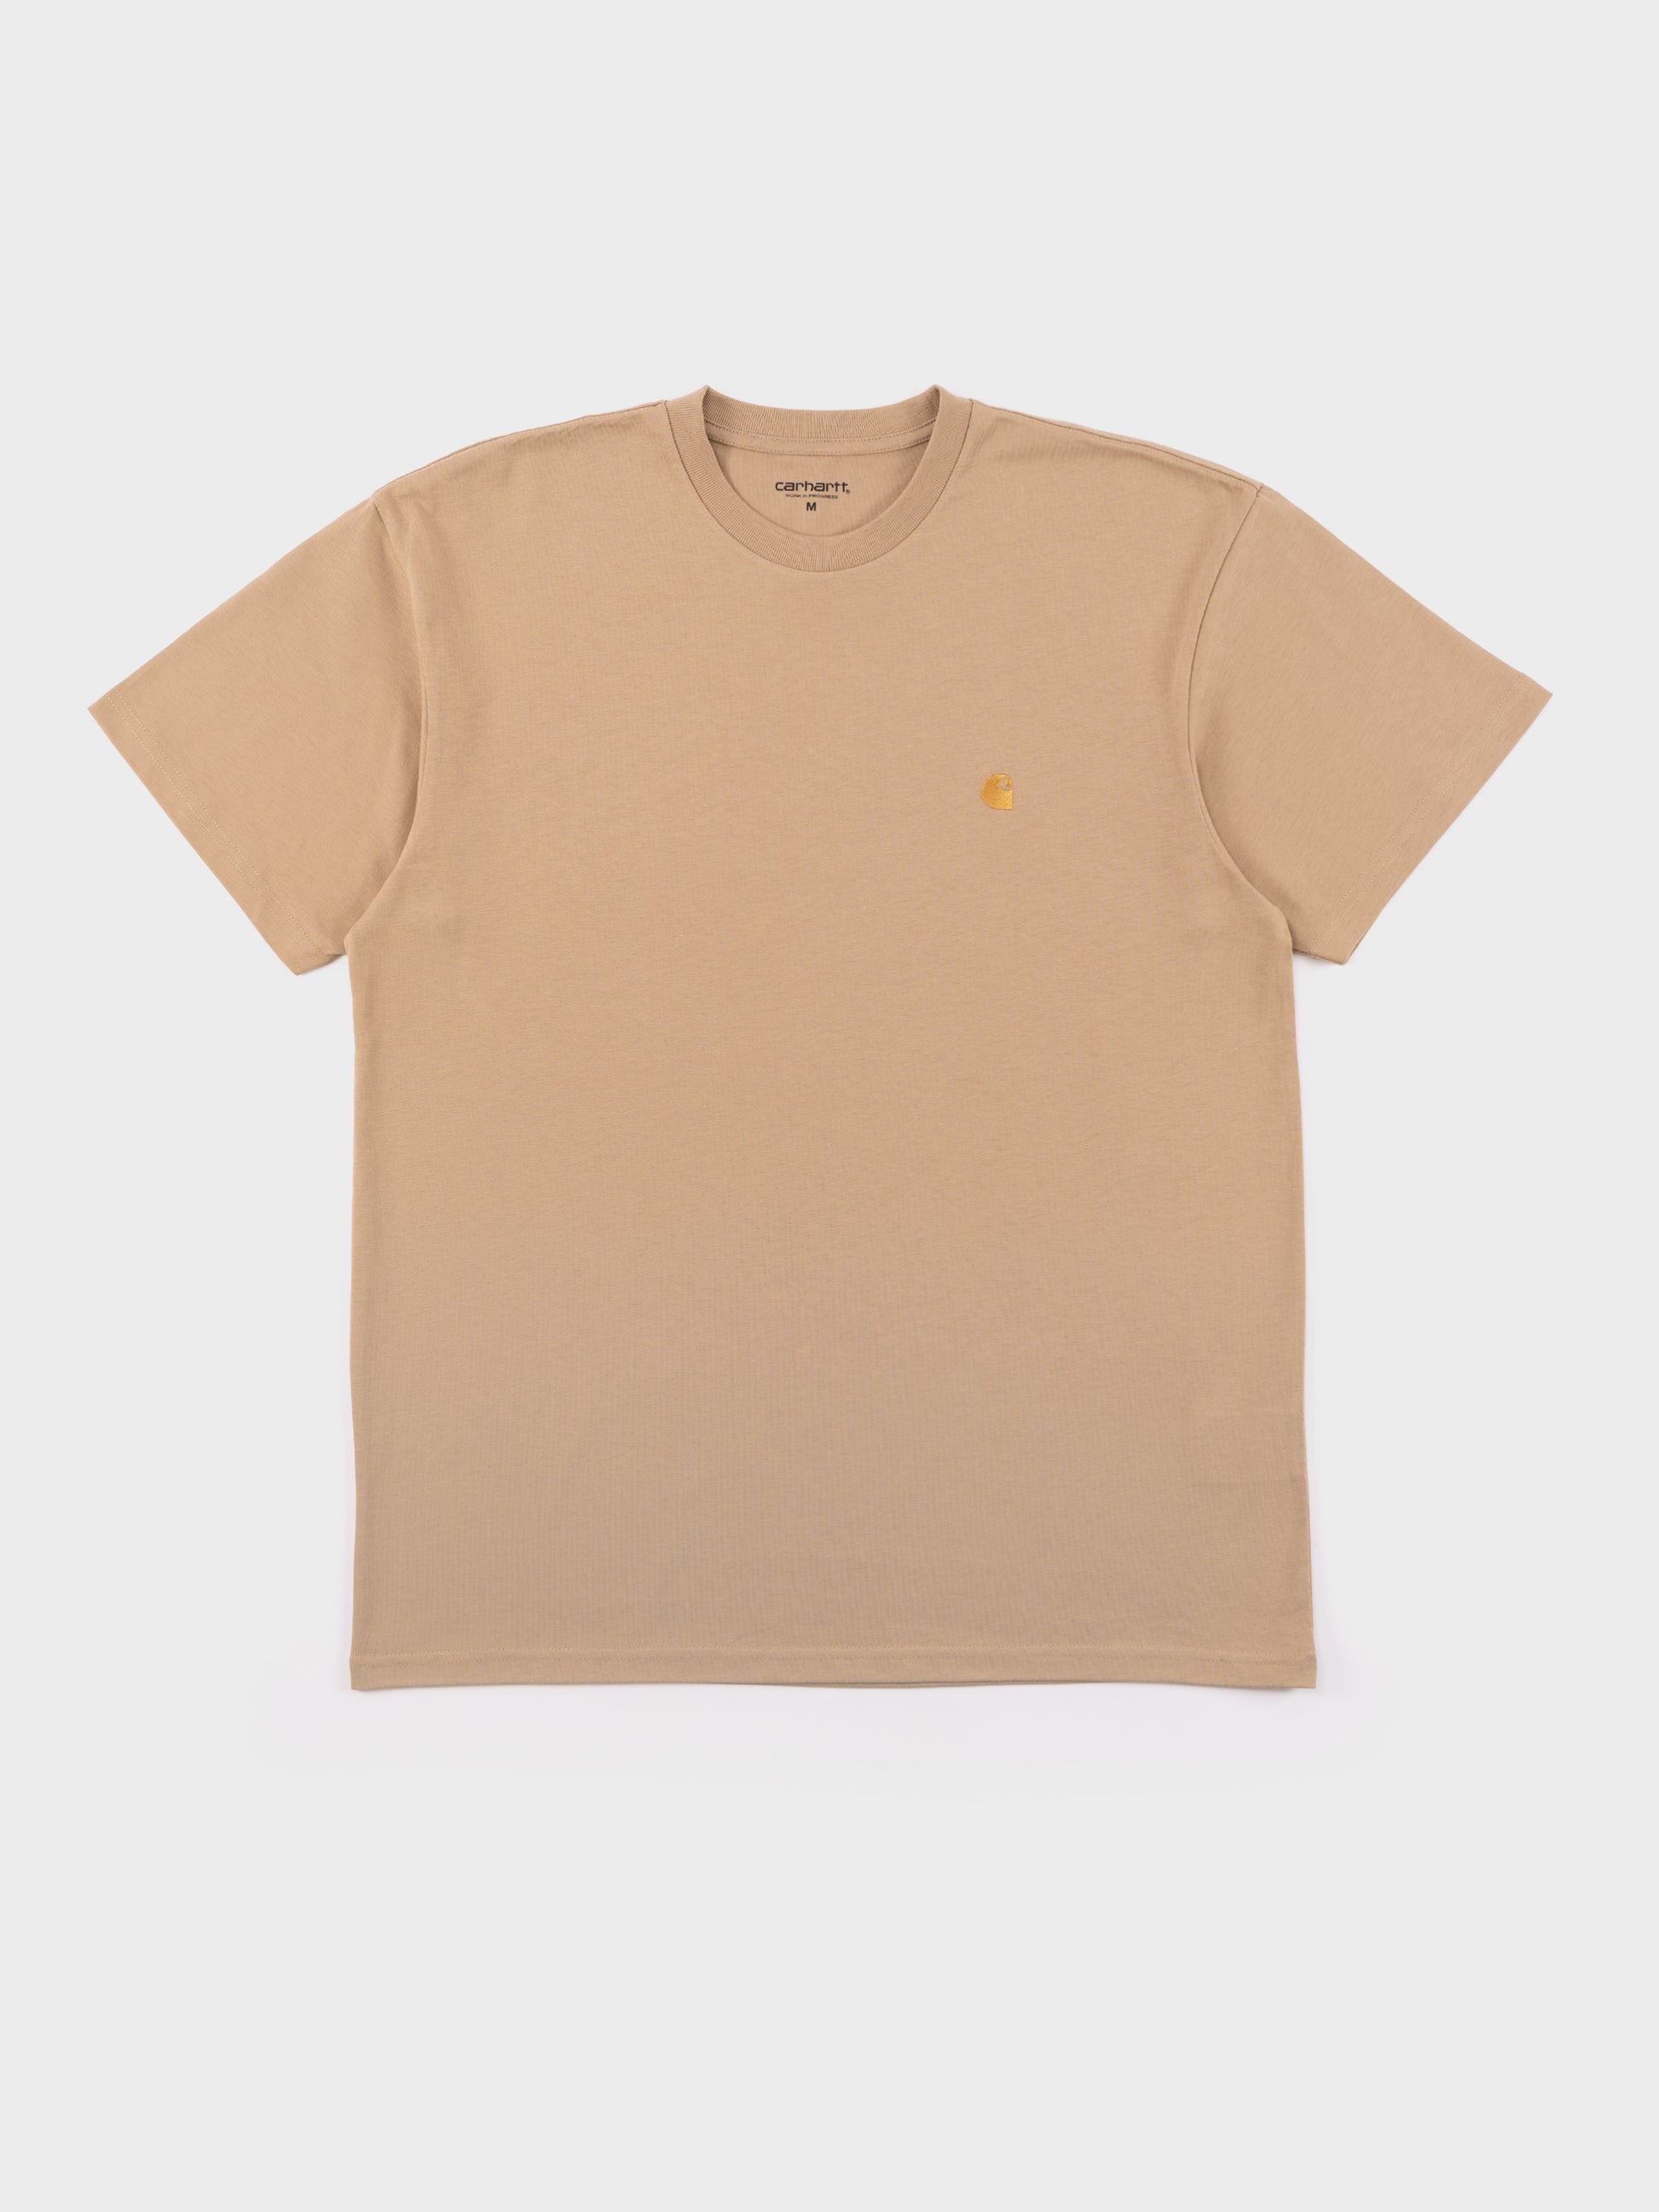 Carhartt SS Chase T Shirt - Sable/Gold